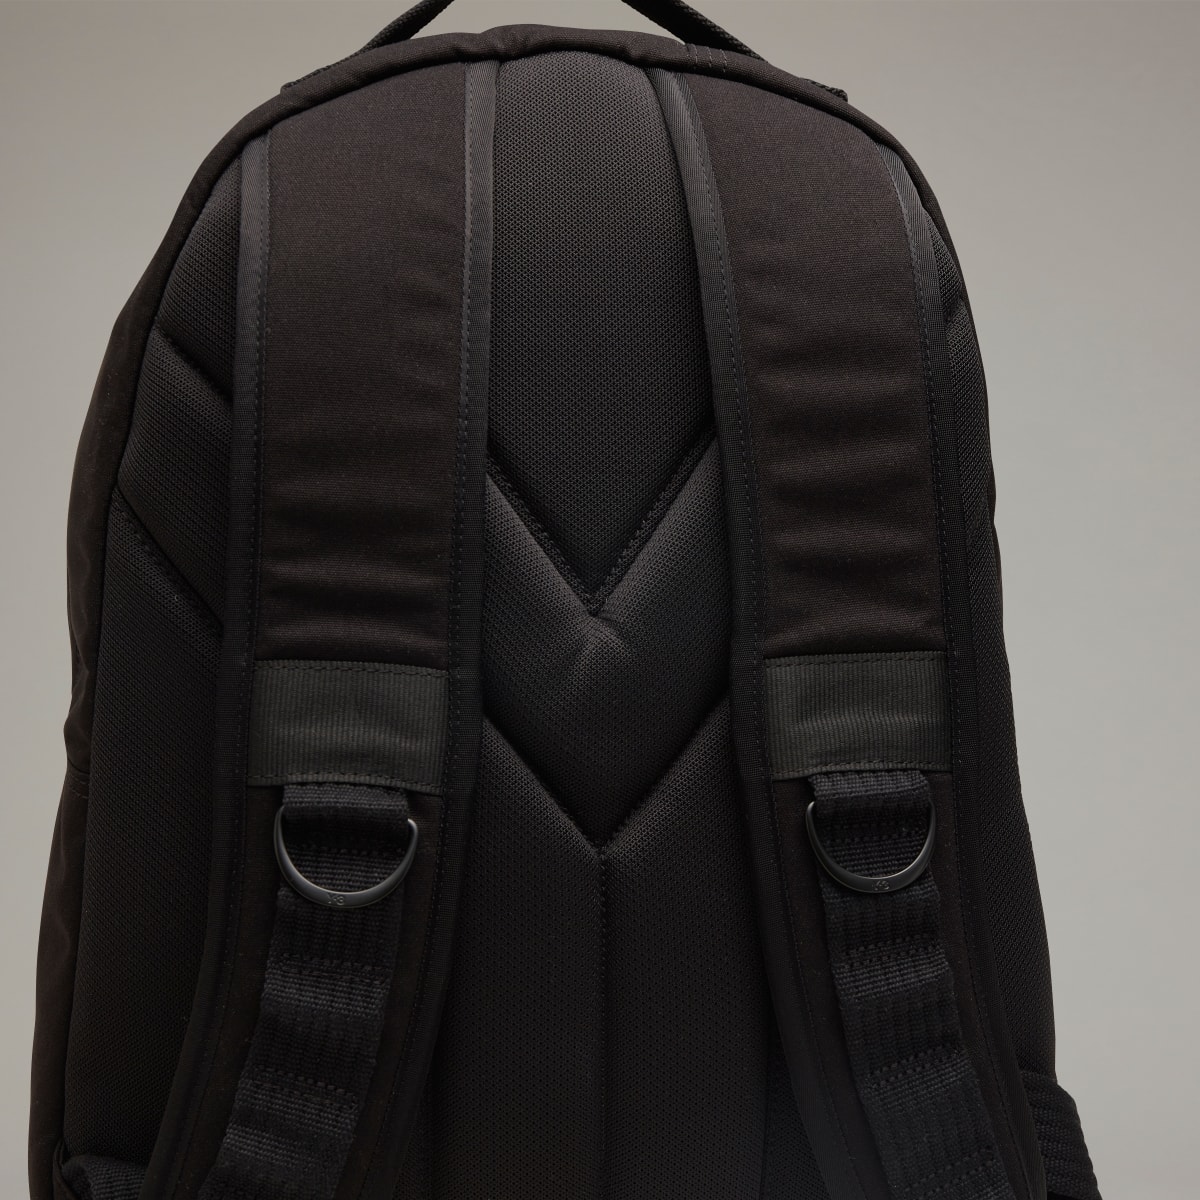 Adidas Y-3 Classic Backpack. 8